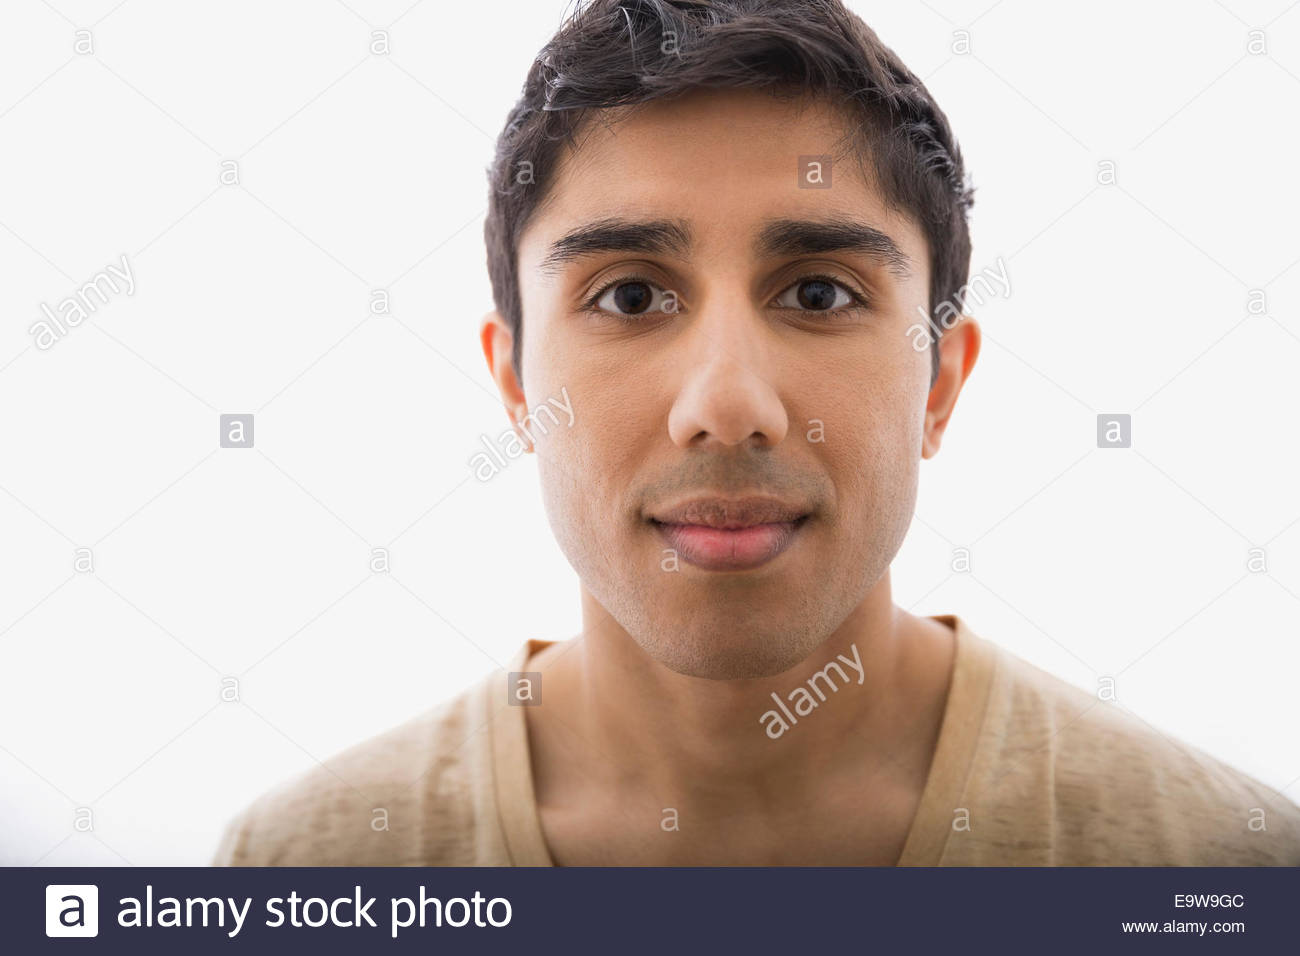 Close up portrait of confident man Stock Photo